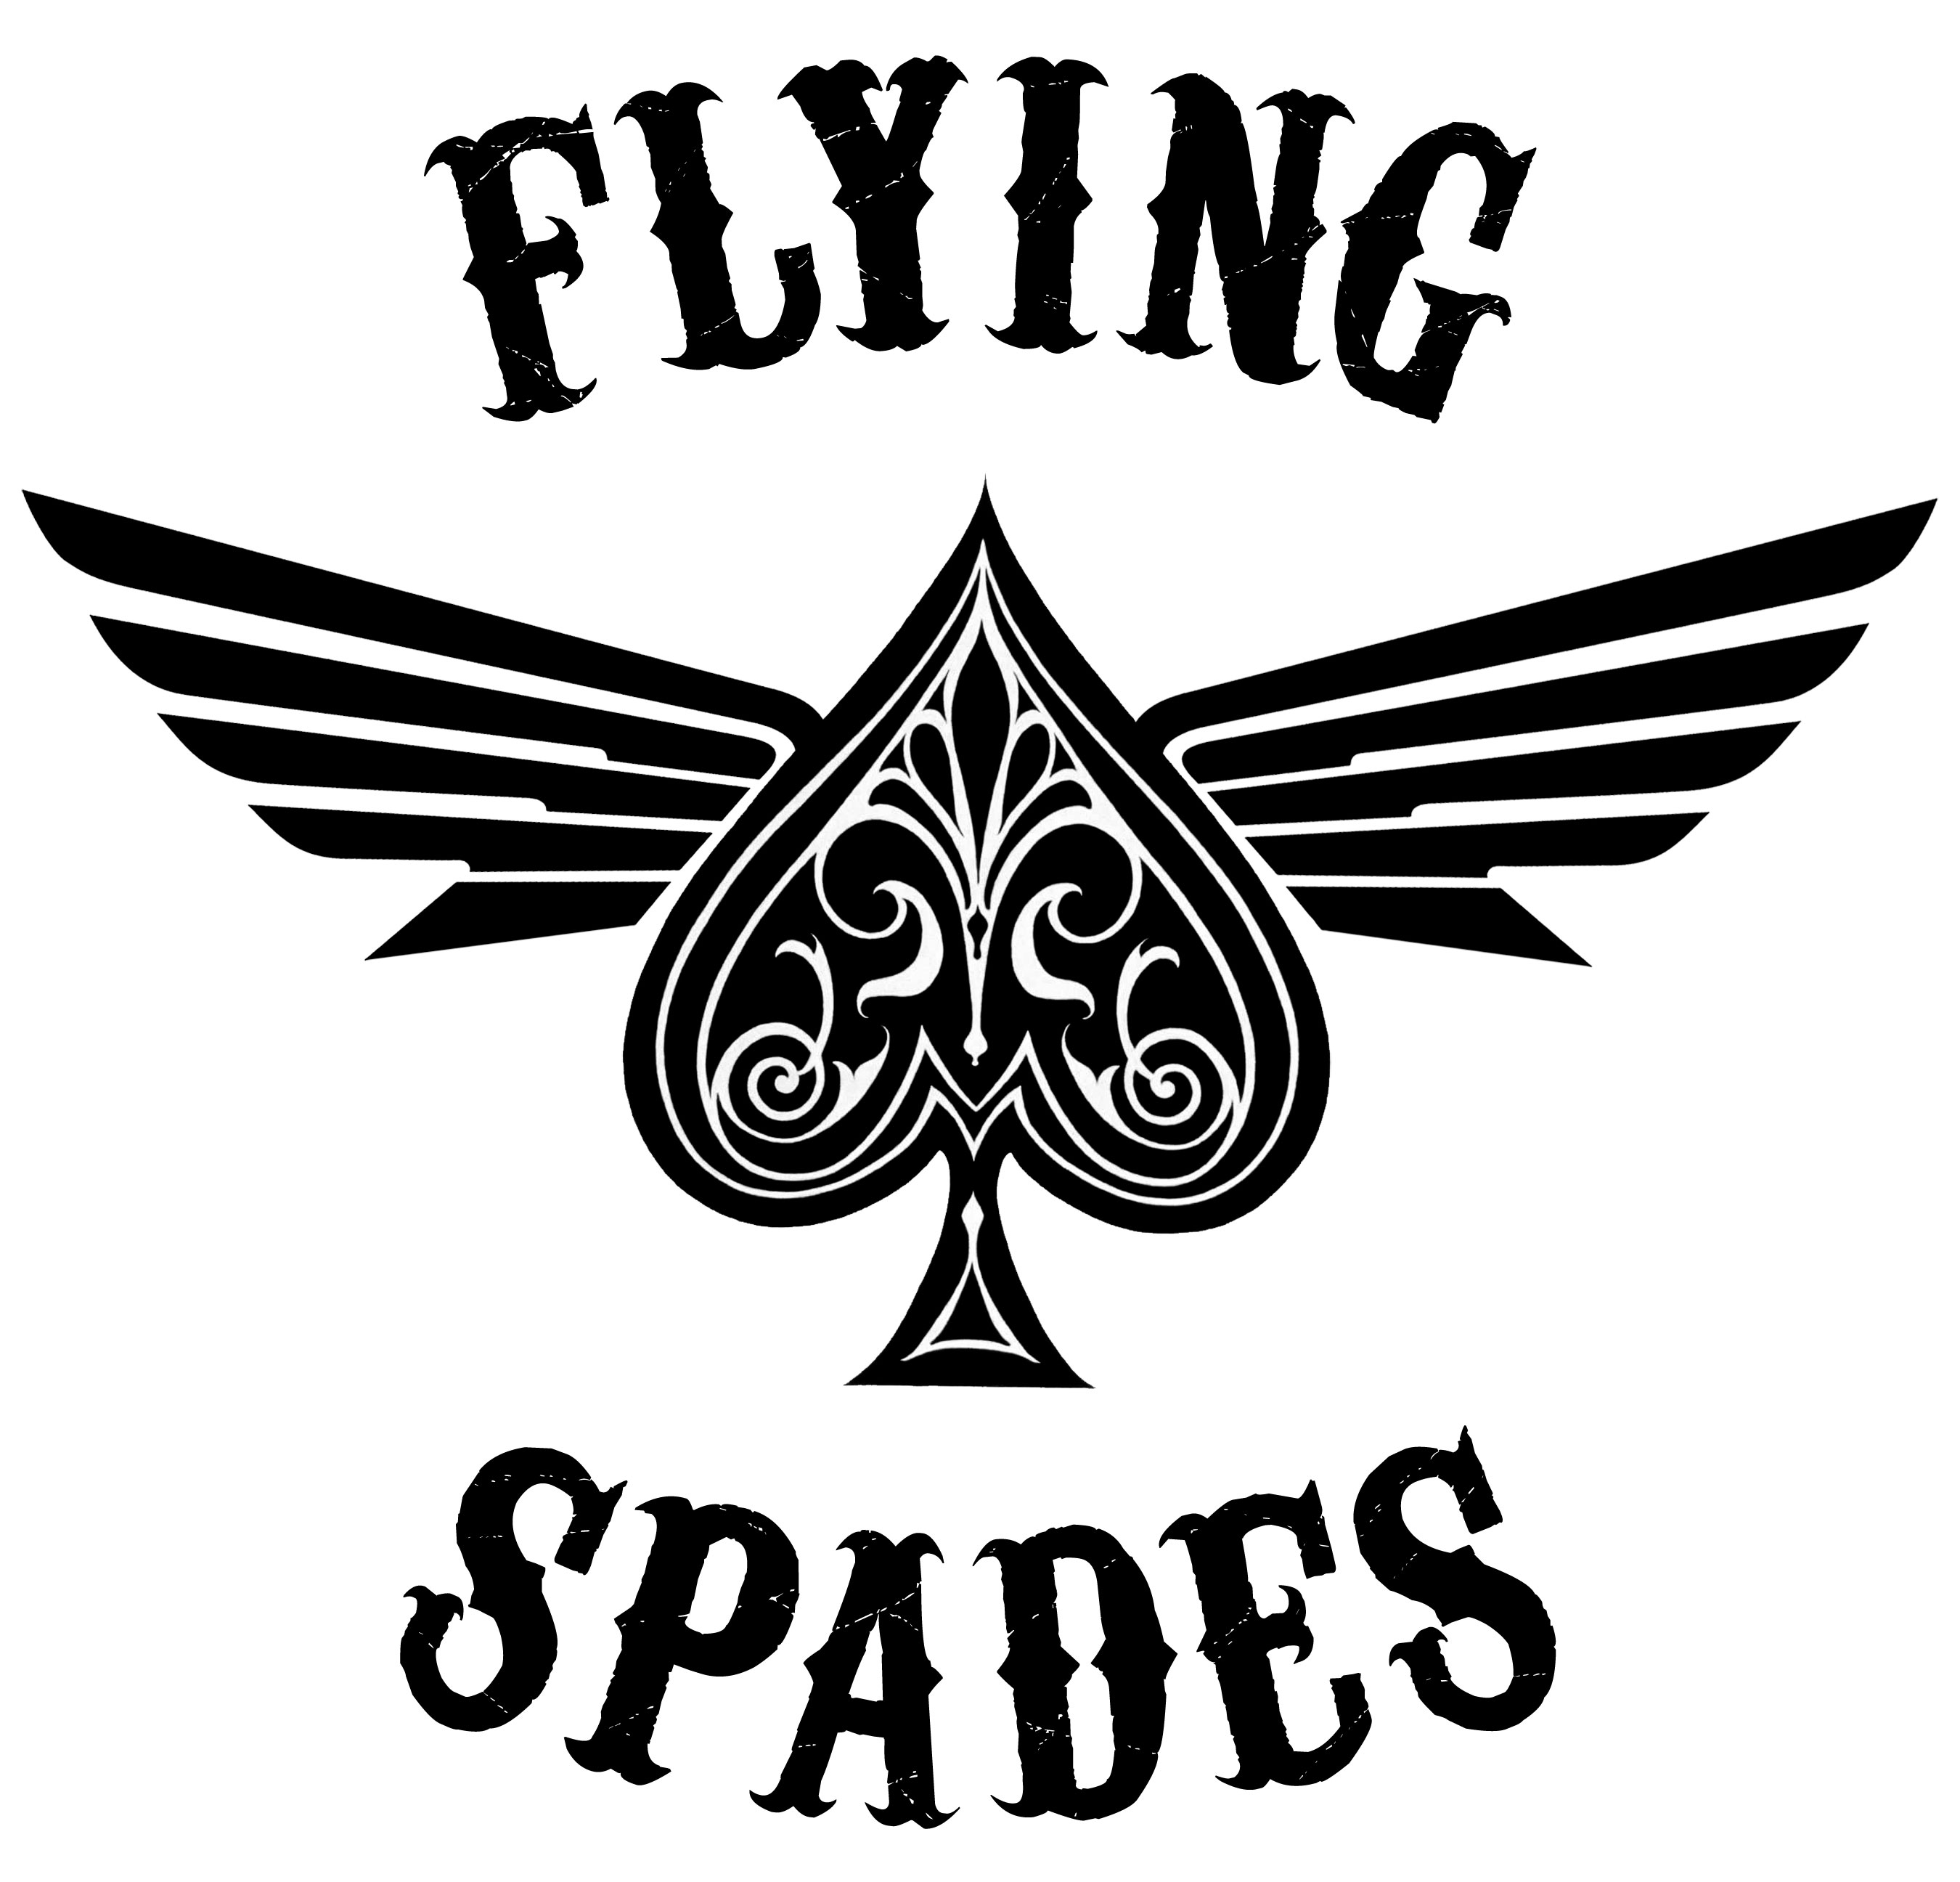 ace of spades design - Clip Art Library